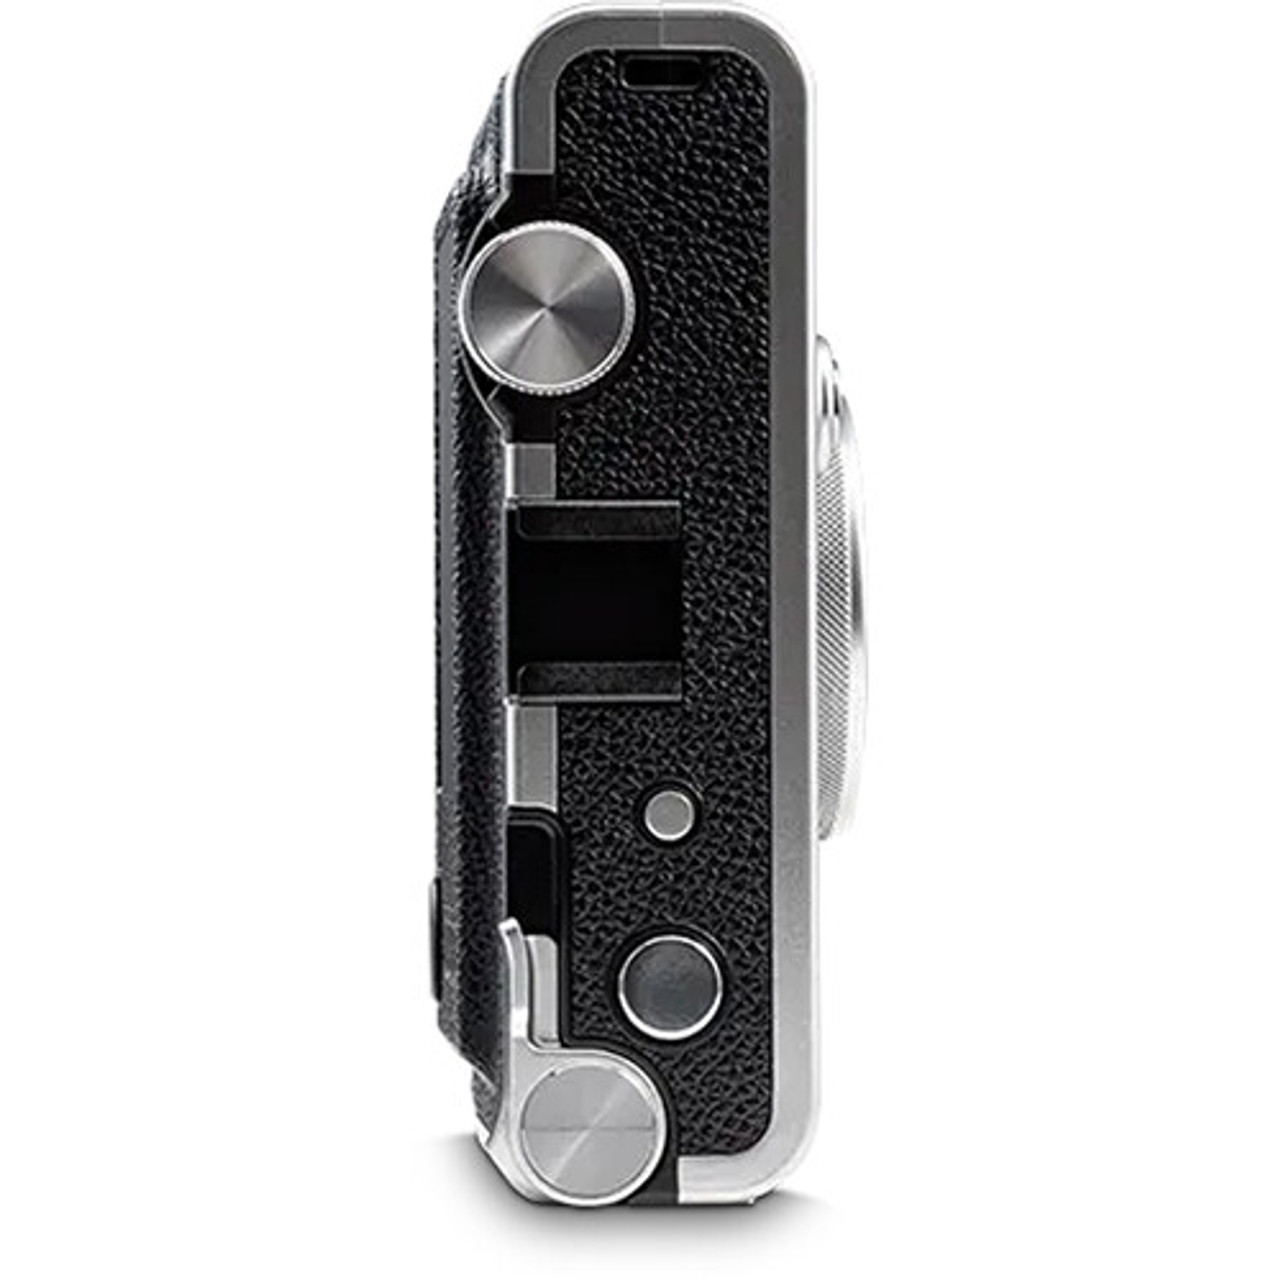 Fujifilm instax mini Evo Hybrid Instant Camera - Black for sale online